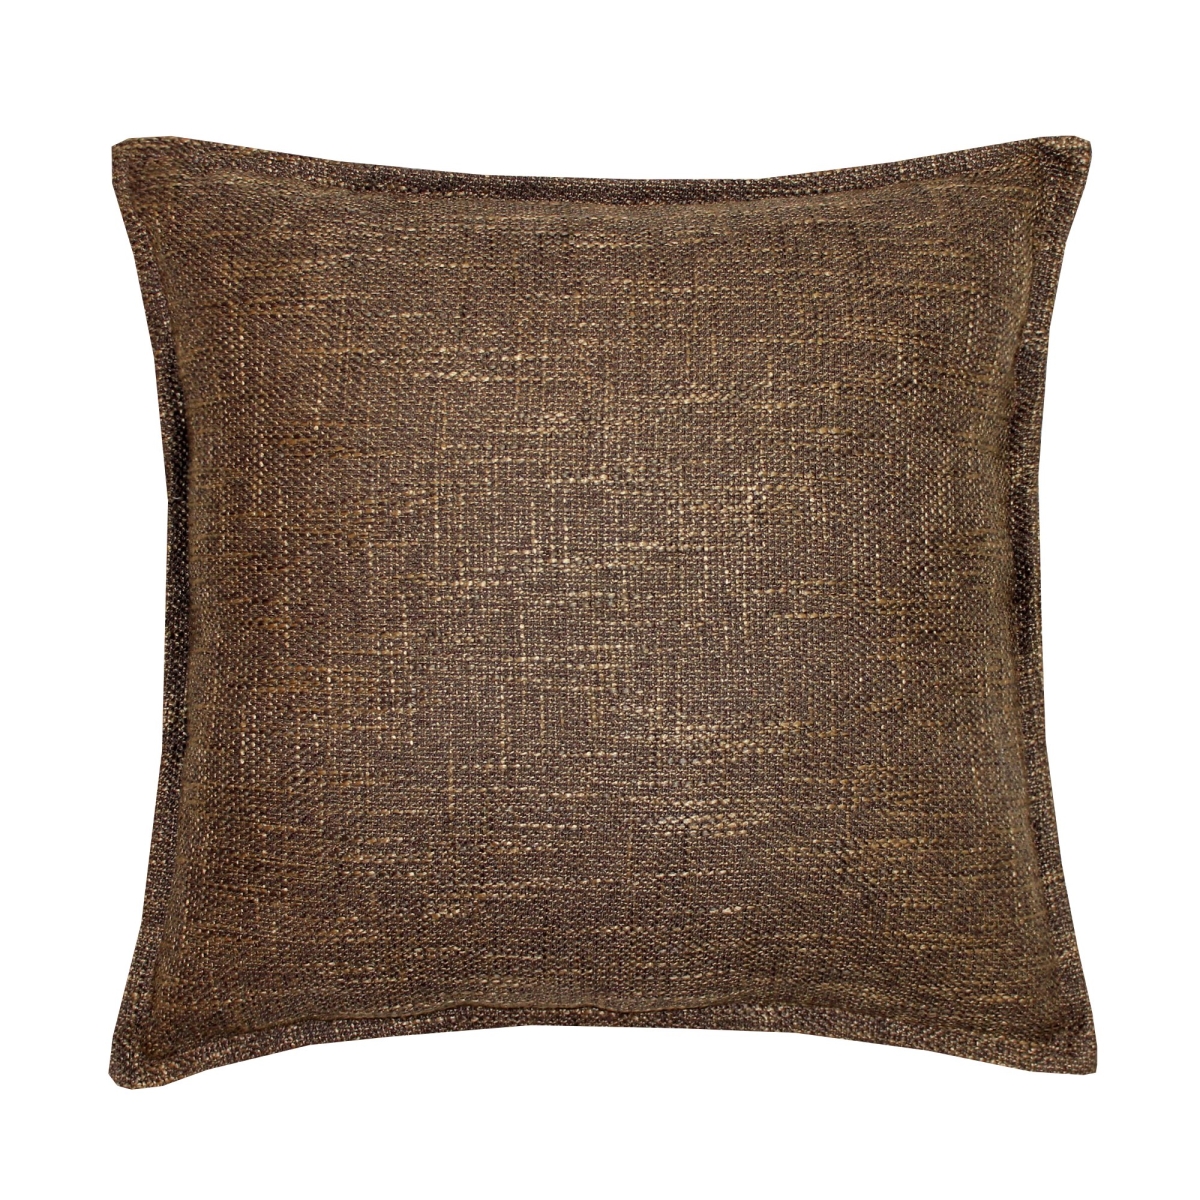 18 X 18 In. Burlap Cushion Cover - Brown